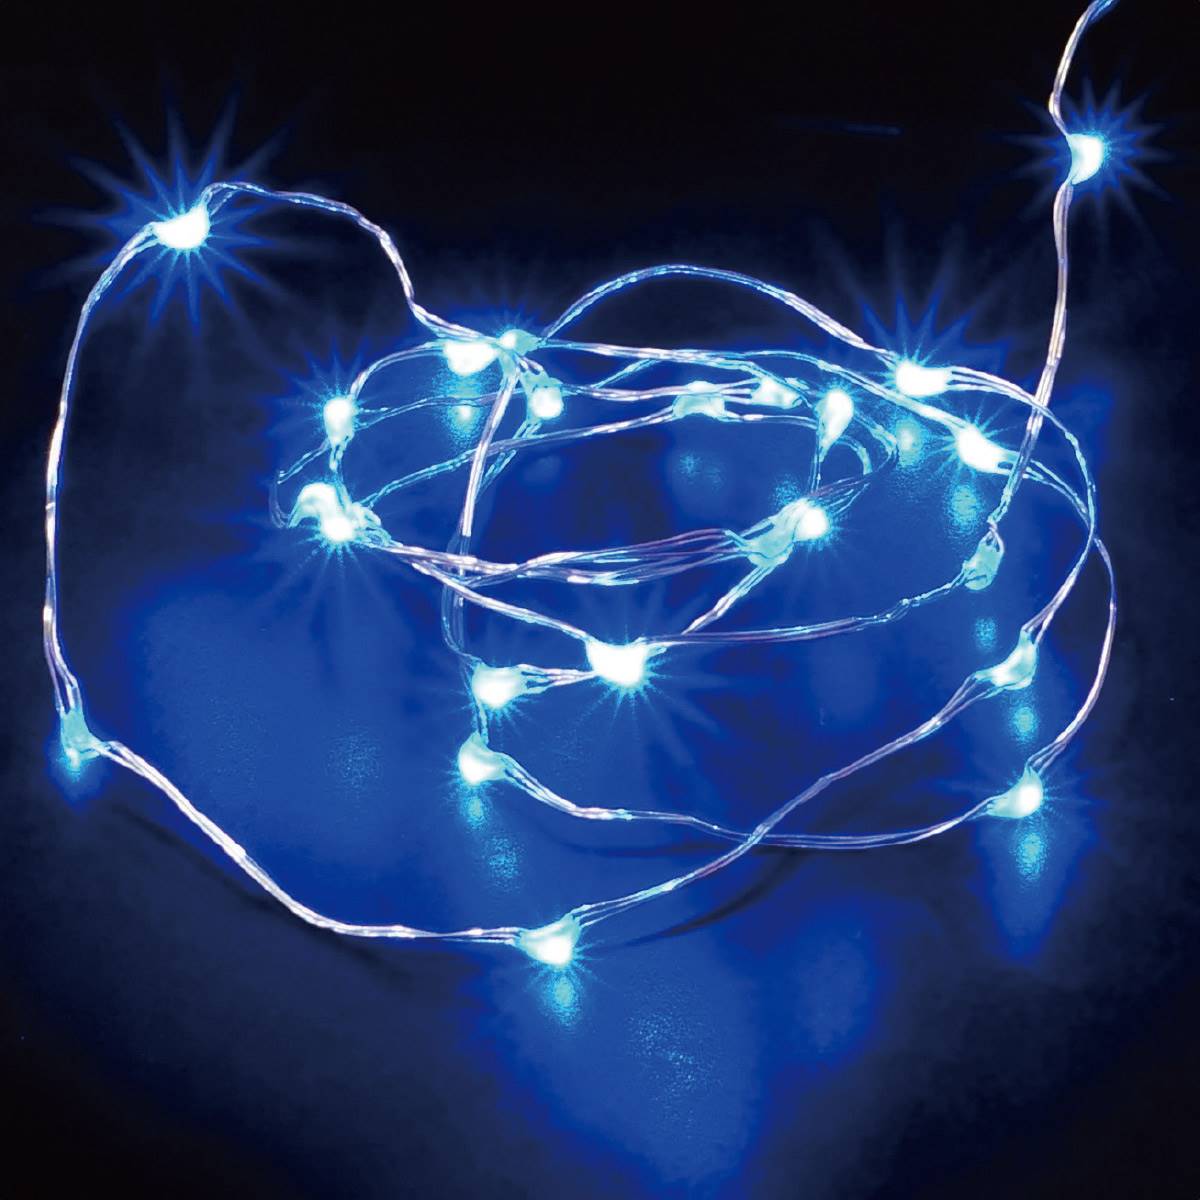 LED　星型　イルミネーション　カーテン ライト ブルー